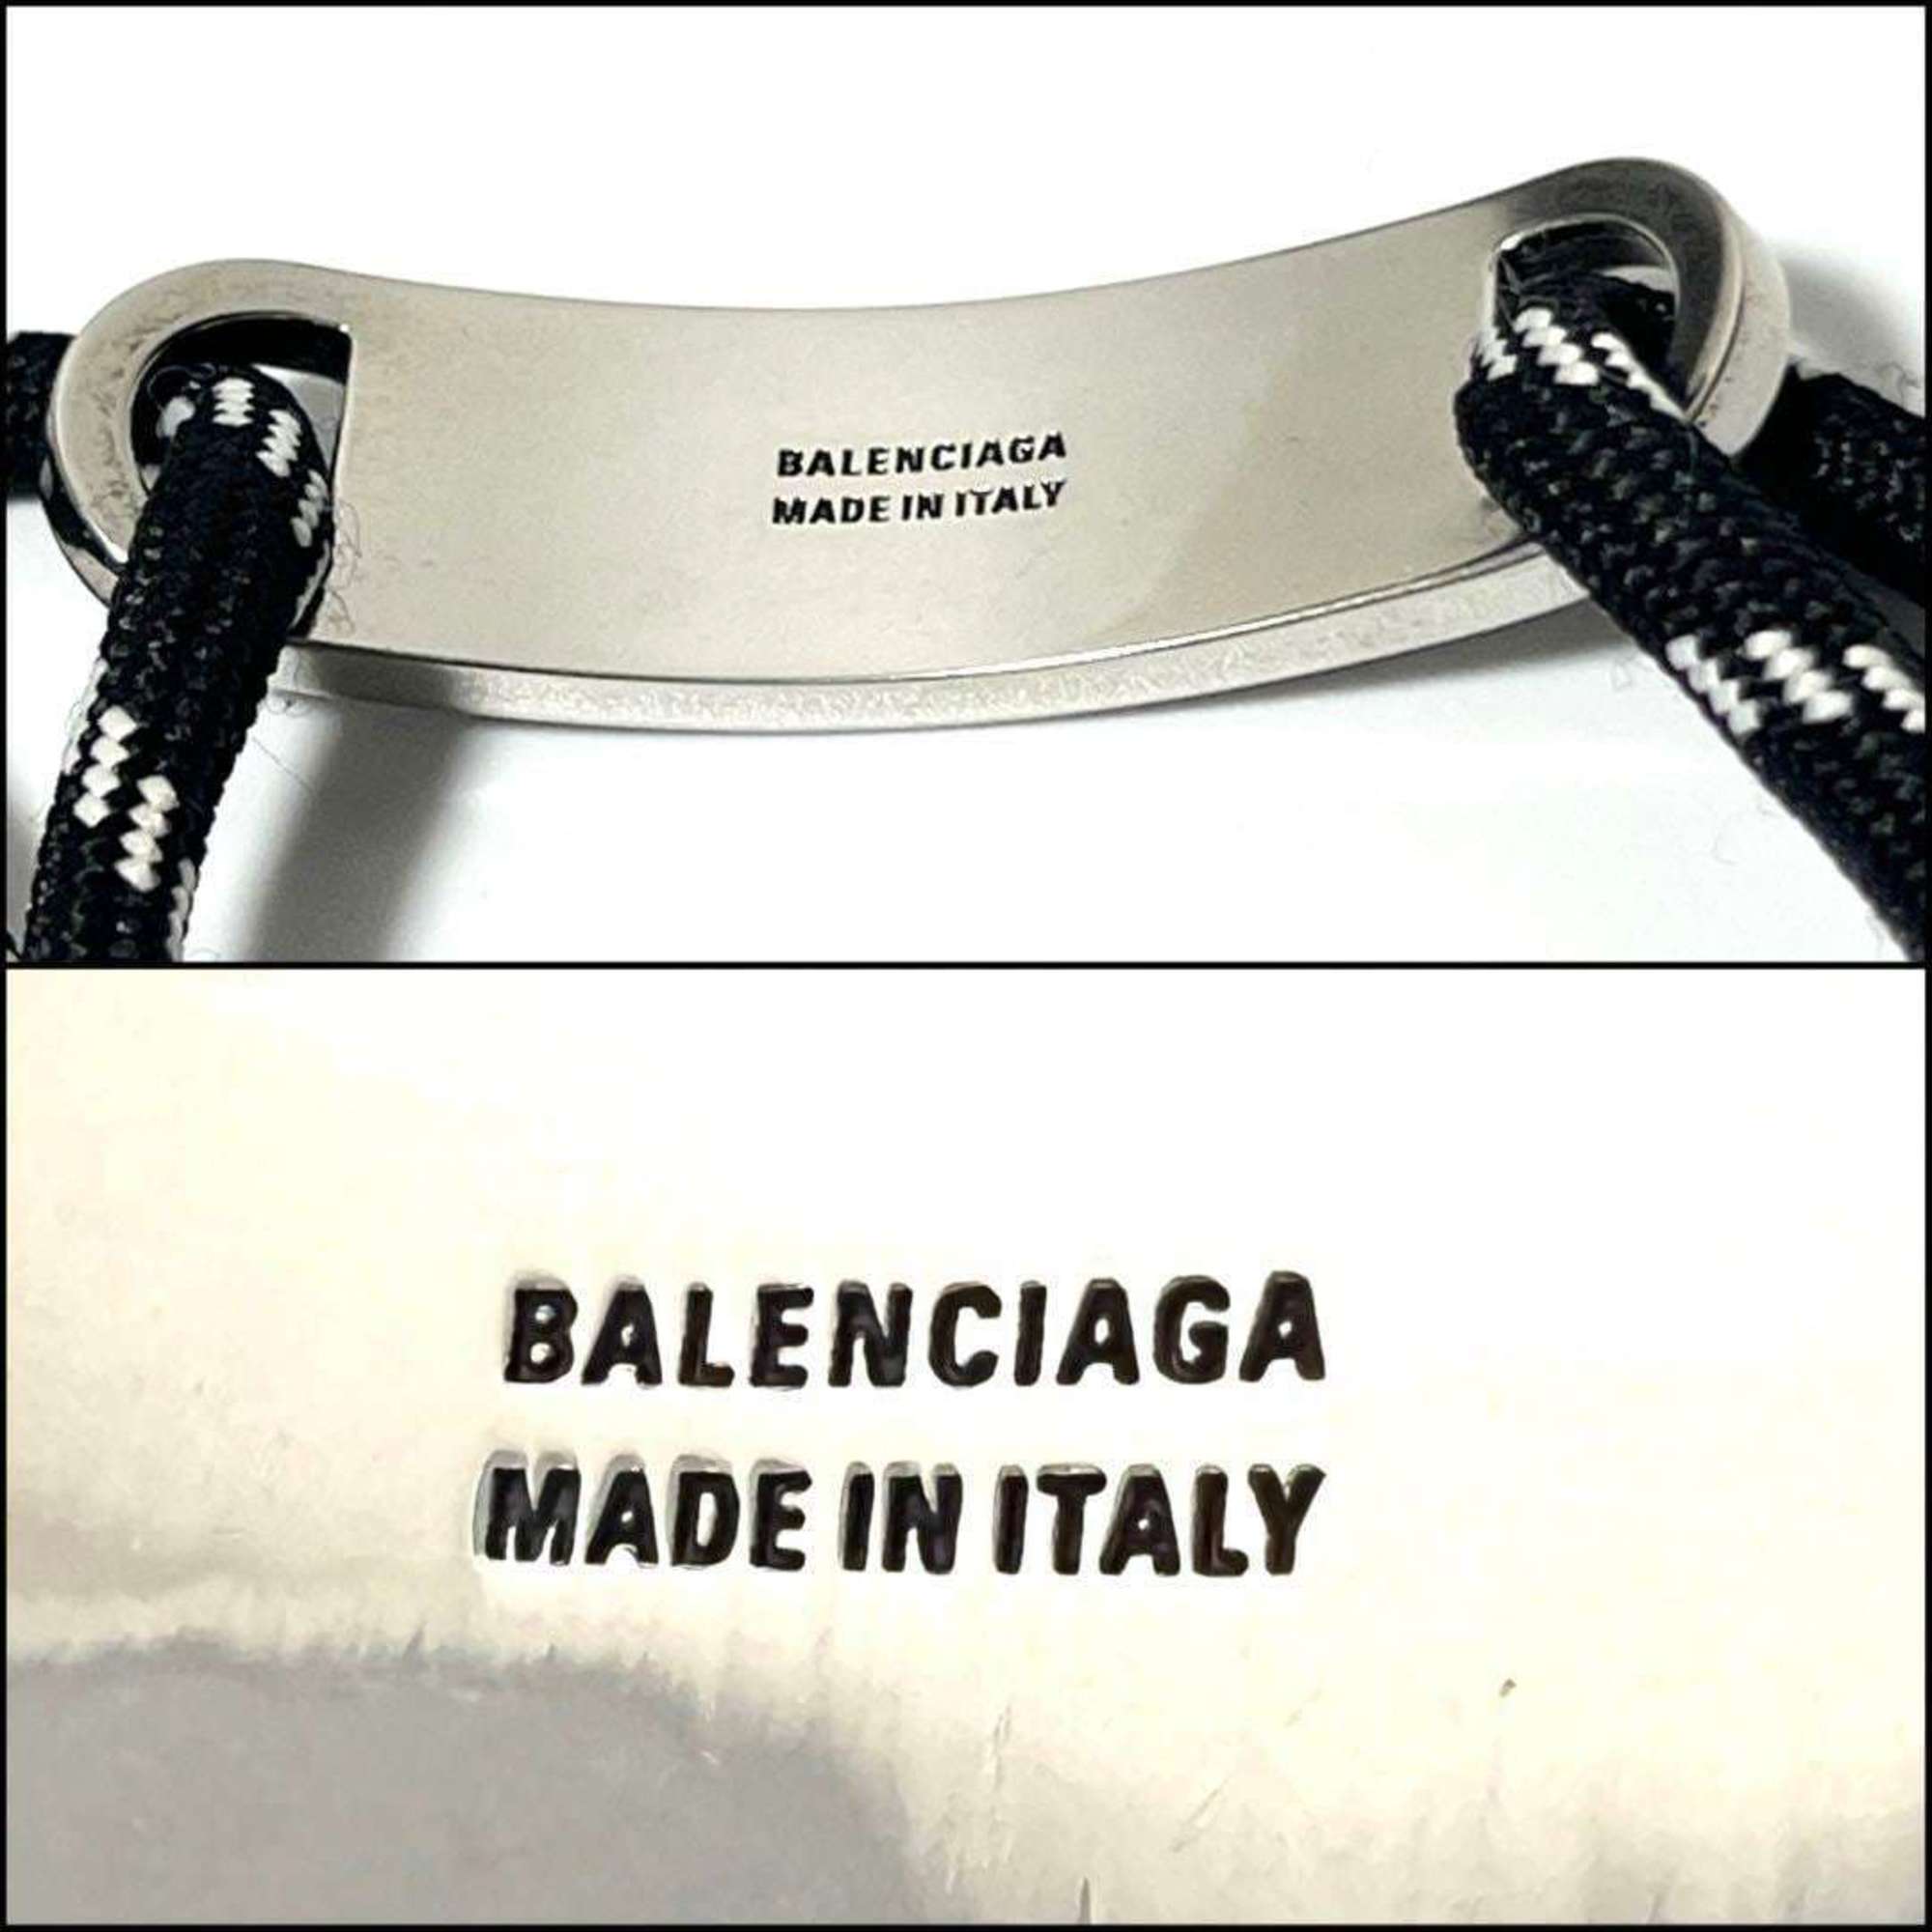 Balenciaga Men's Plate Bracelet Bangle